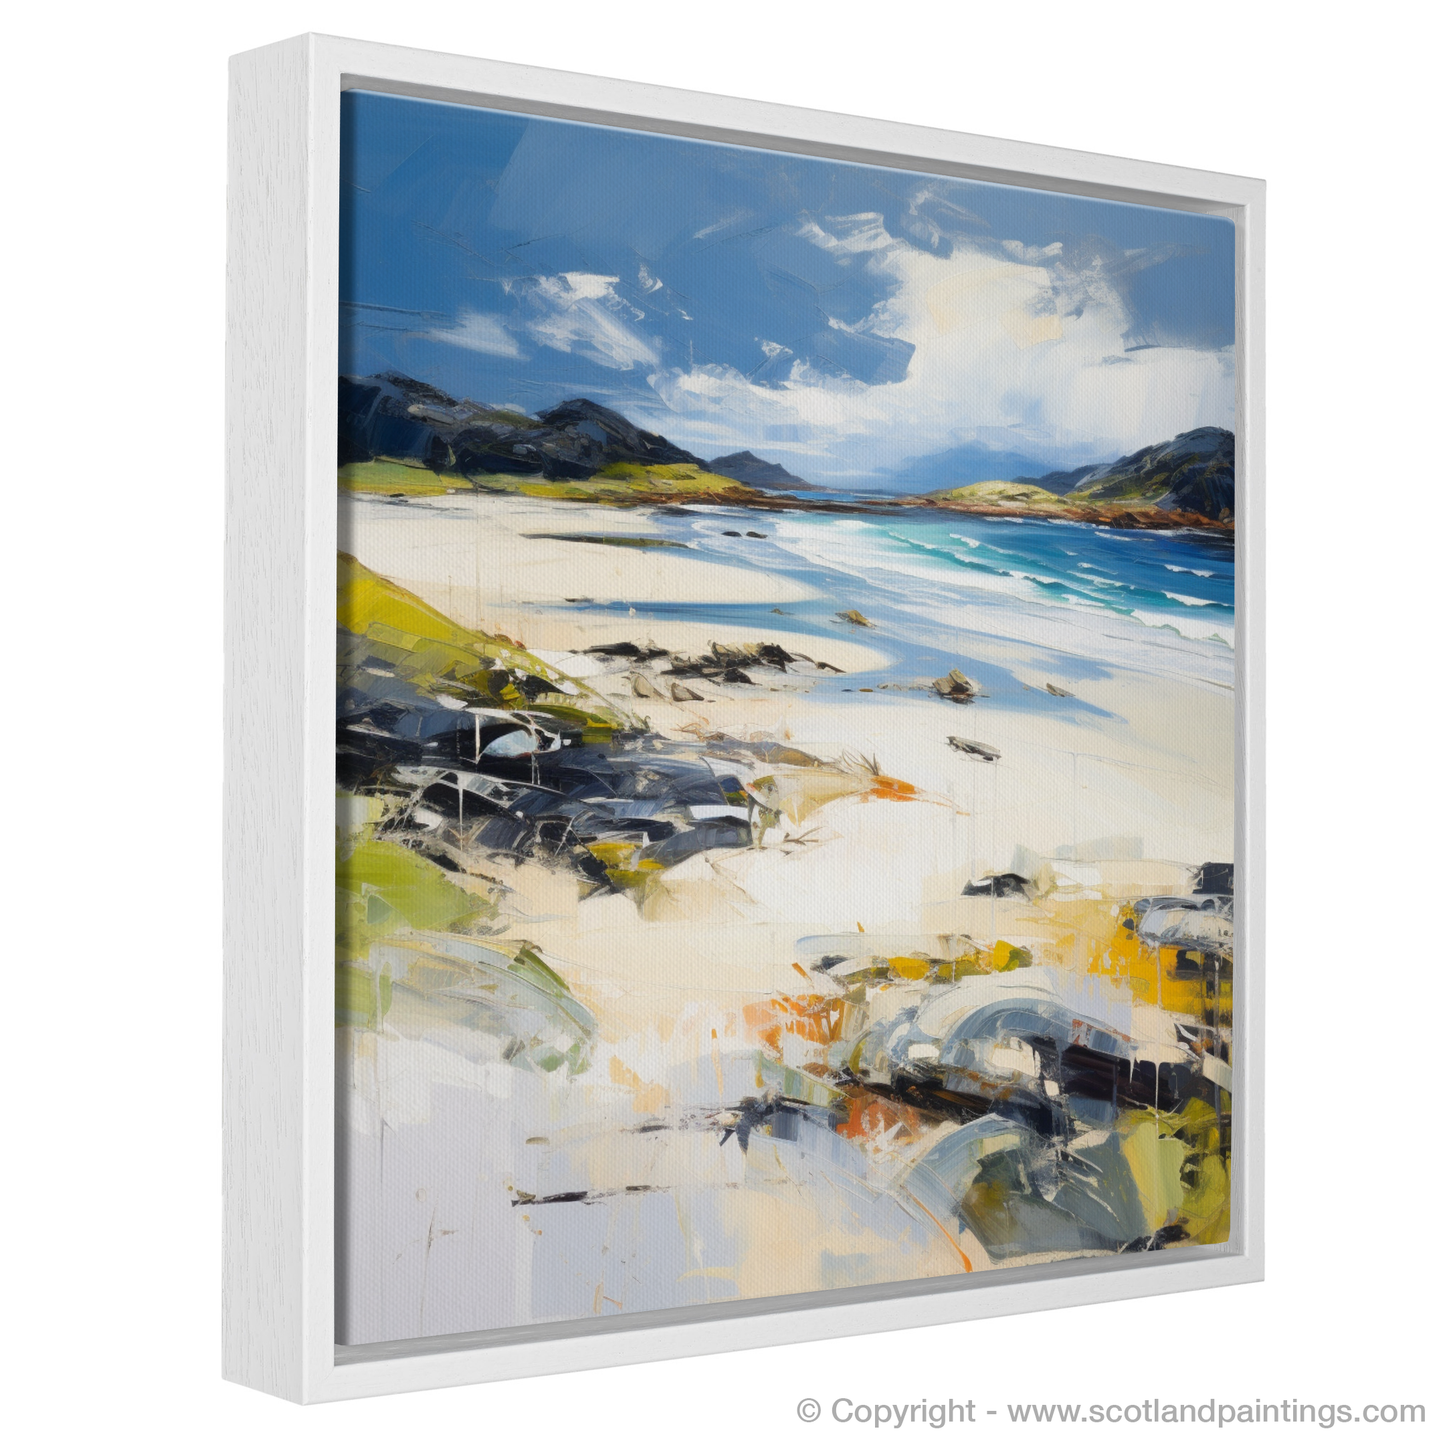 Painting and Art Print of Camusdarach Beach, Arisaig entitled "Expression of Camusdarach Beach: An Untamed Scottish Elegance".